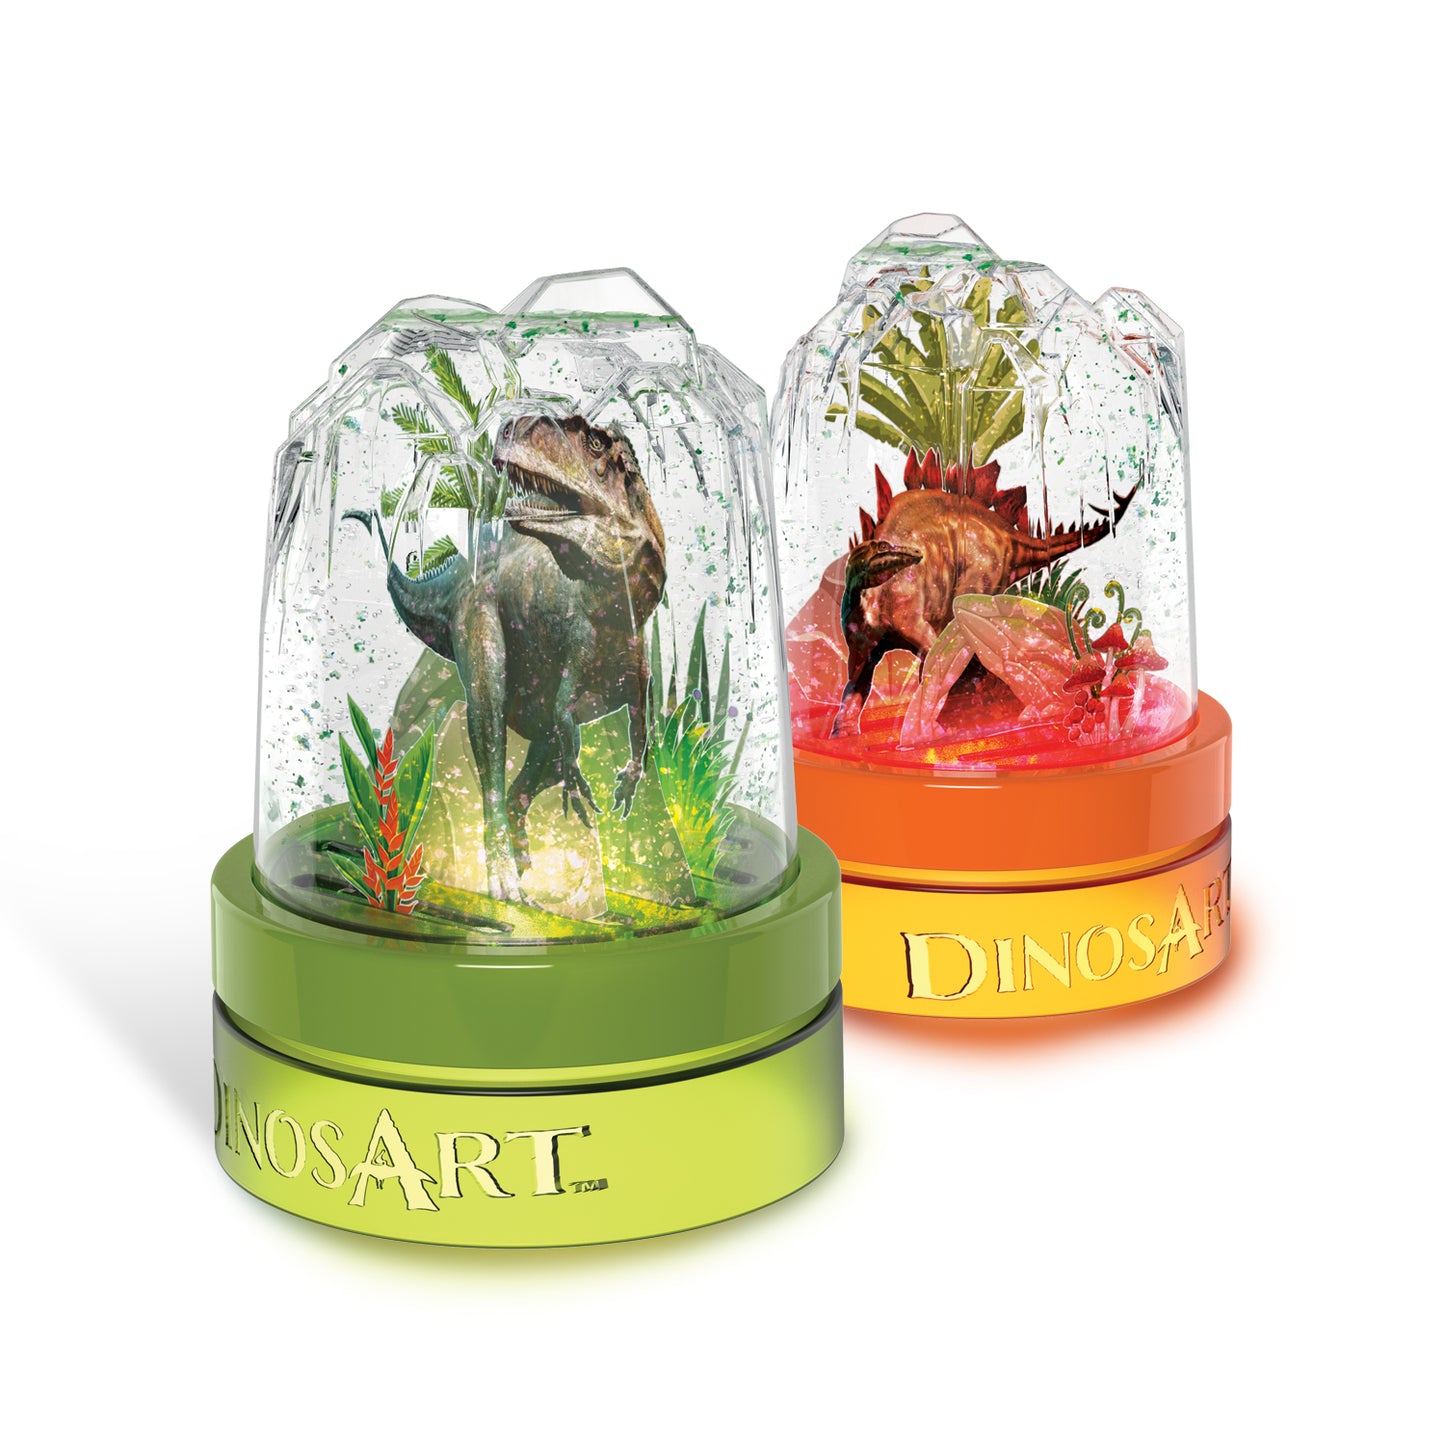 DinosArt Light-up Water Globes